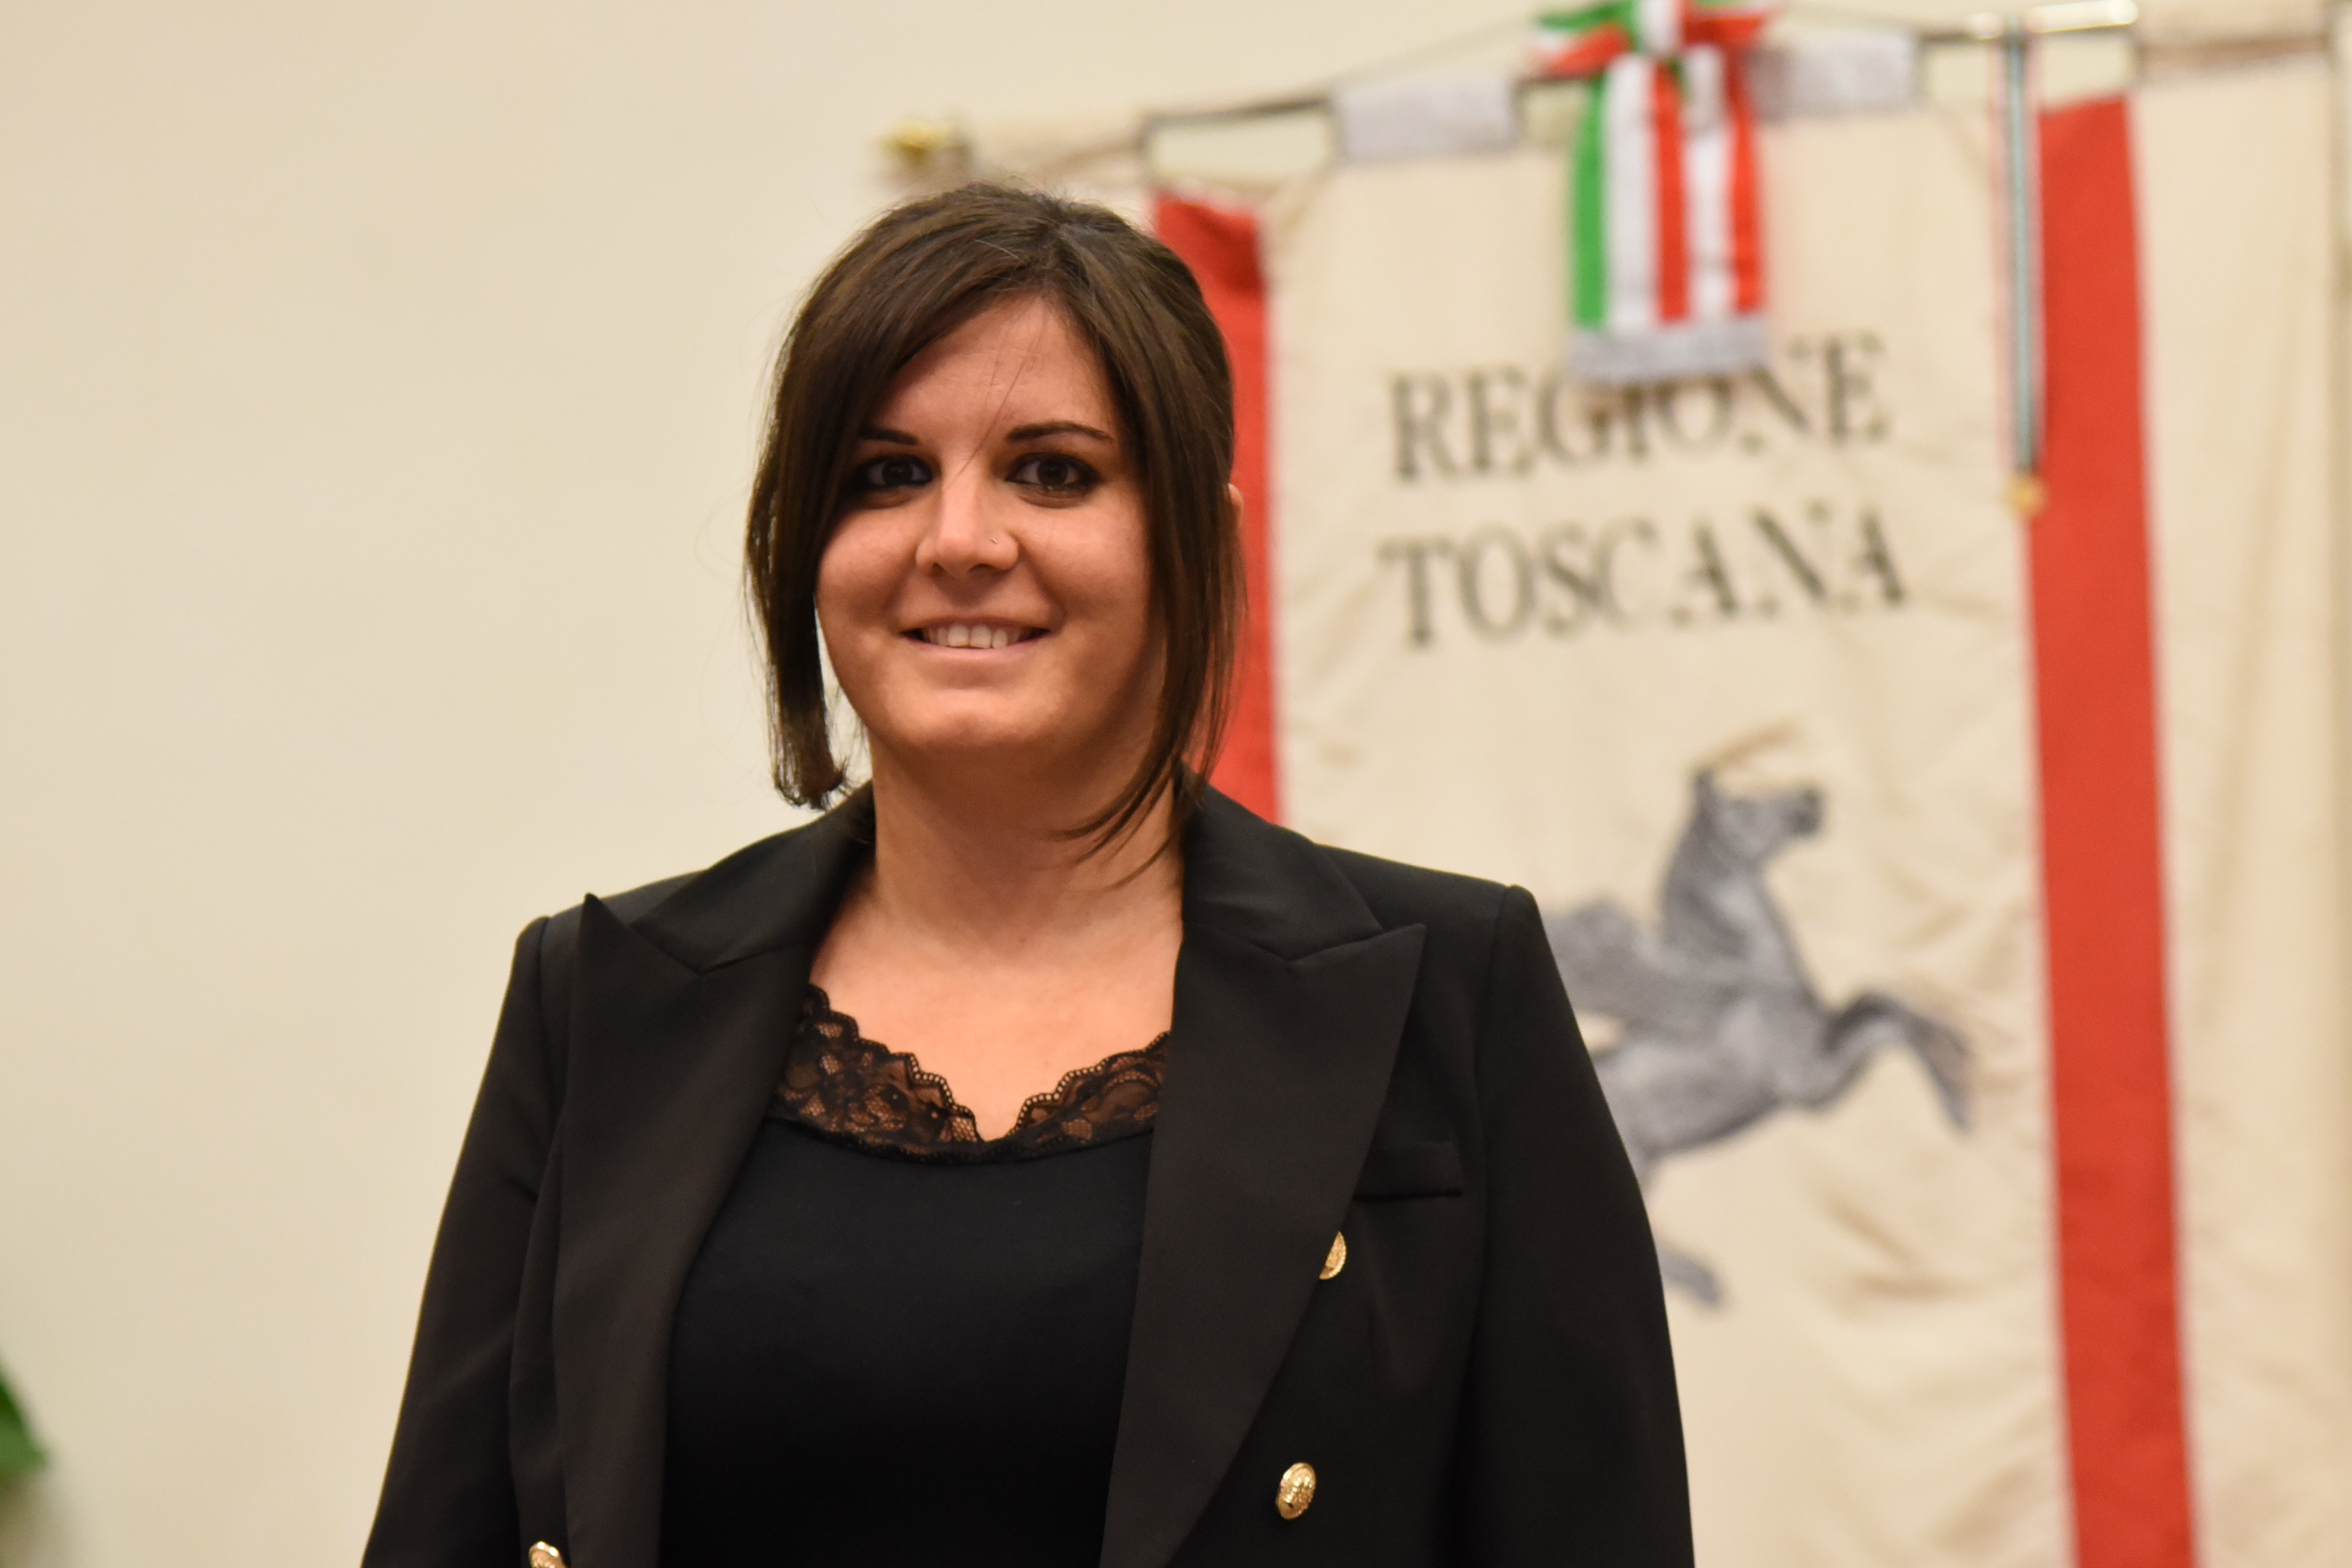 Assessore Alessandra Nardini (Fonte foto Regione Toscana)